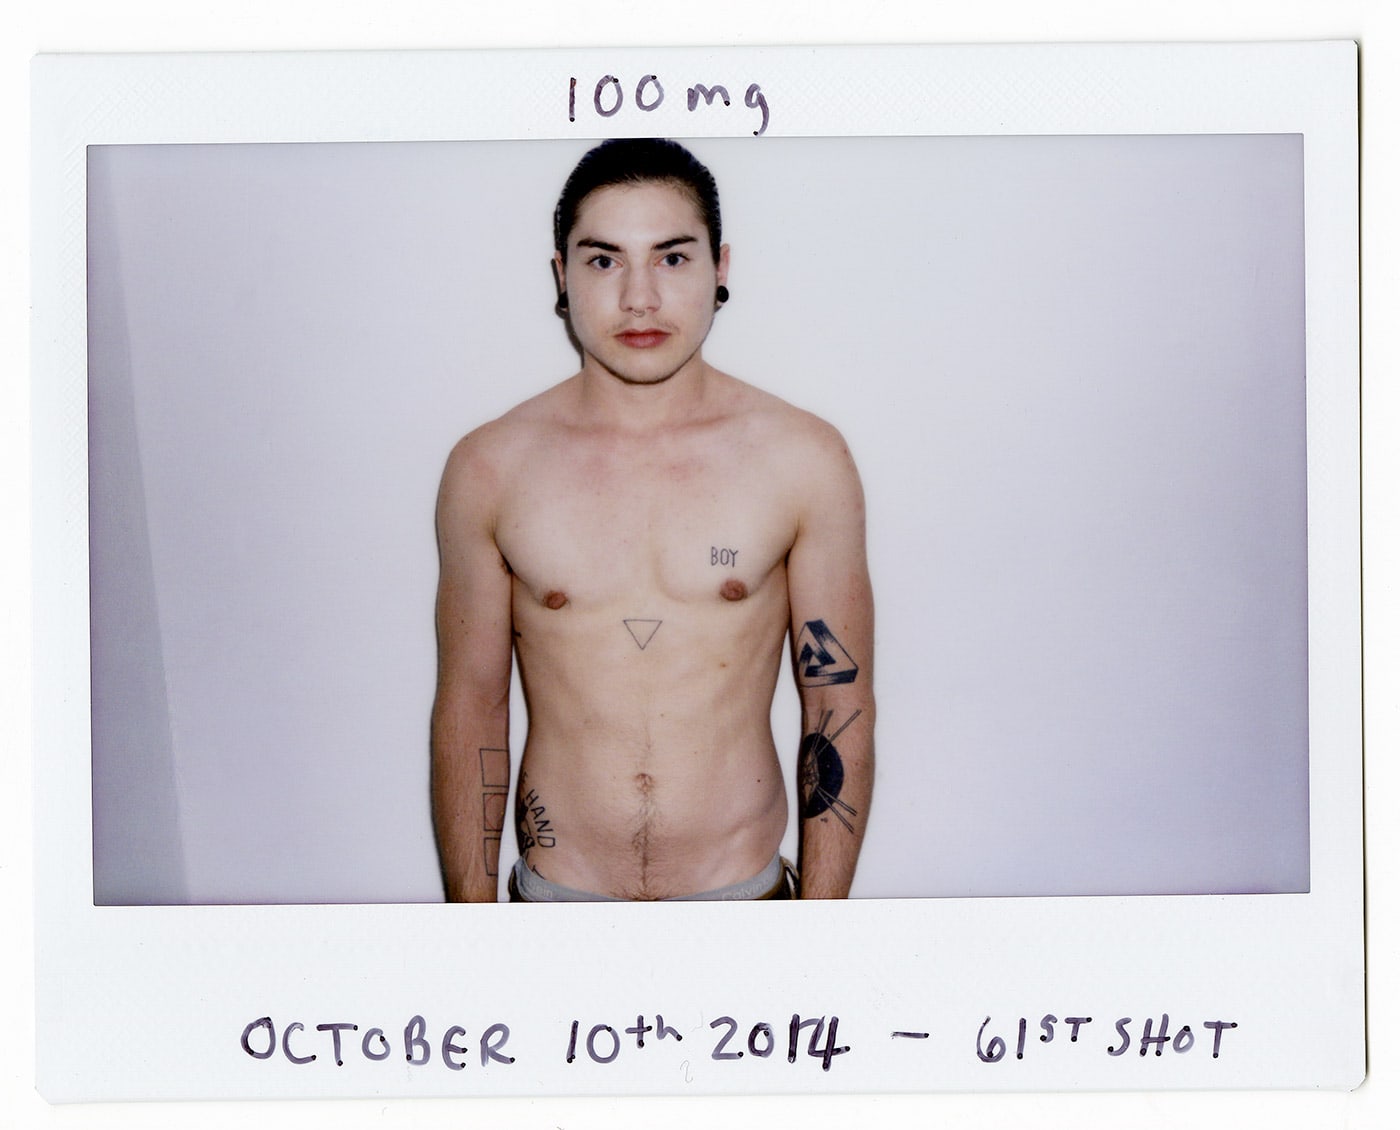 October 10th 2014, 61st shot